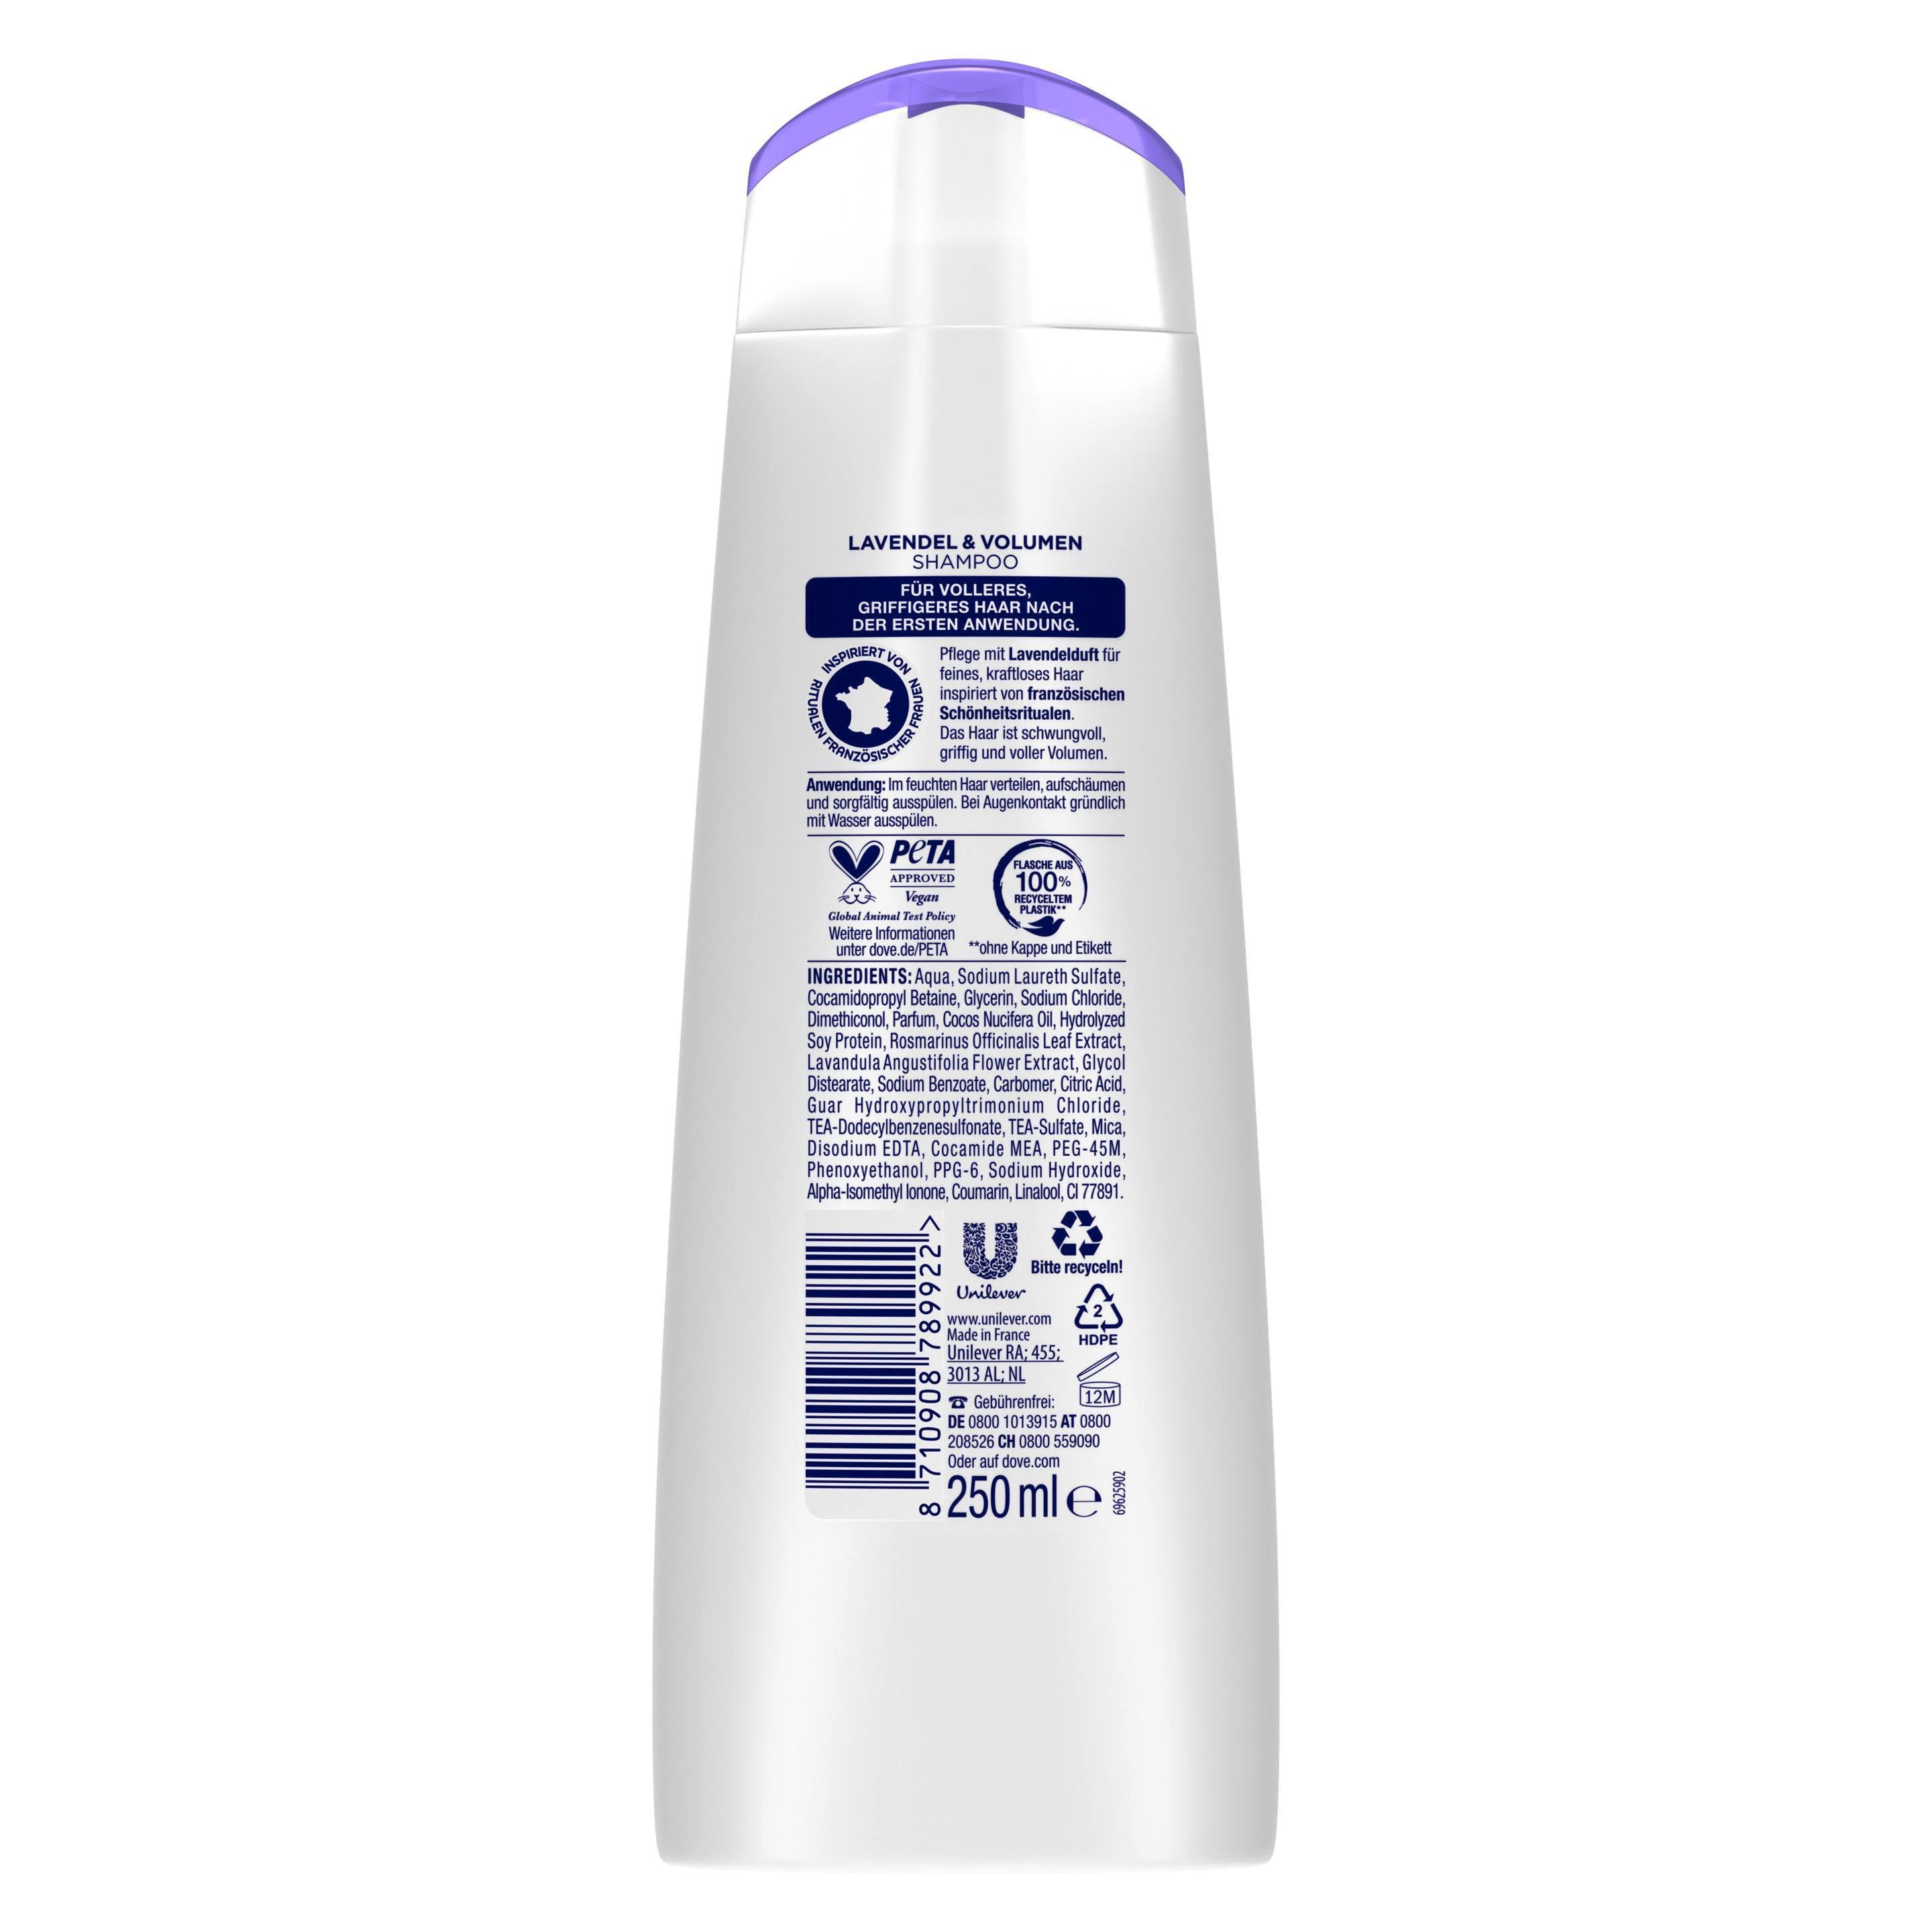 Dove Shampoo Lavendel & Volumen 250 ml